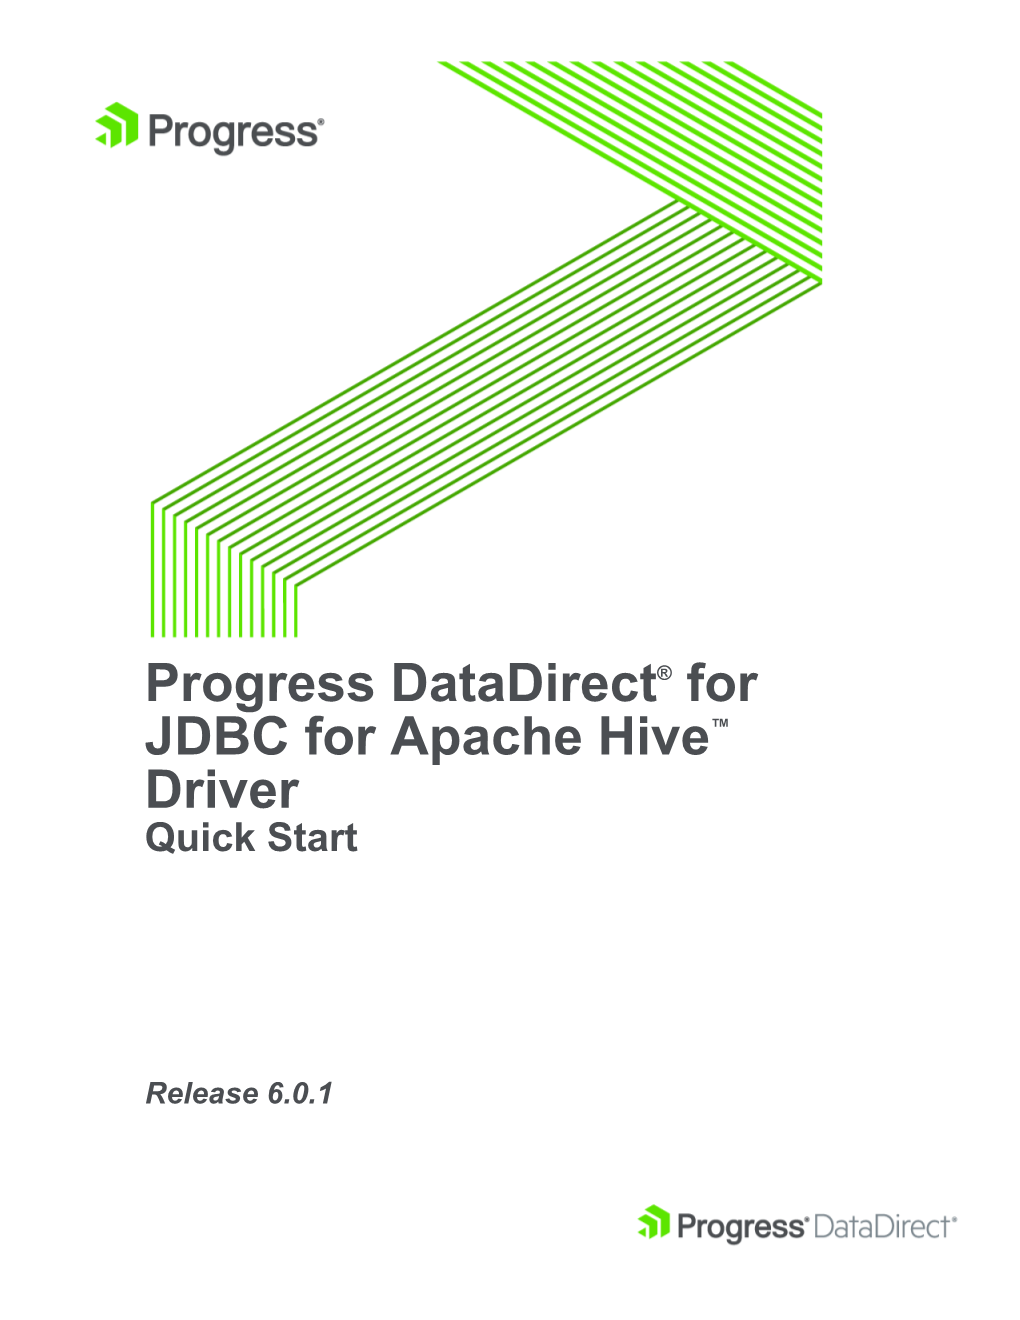 Progress Datadirect for JDBC for Apache Hive Driver Quick Start